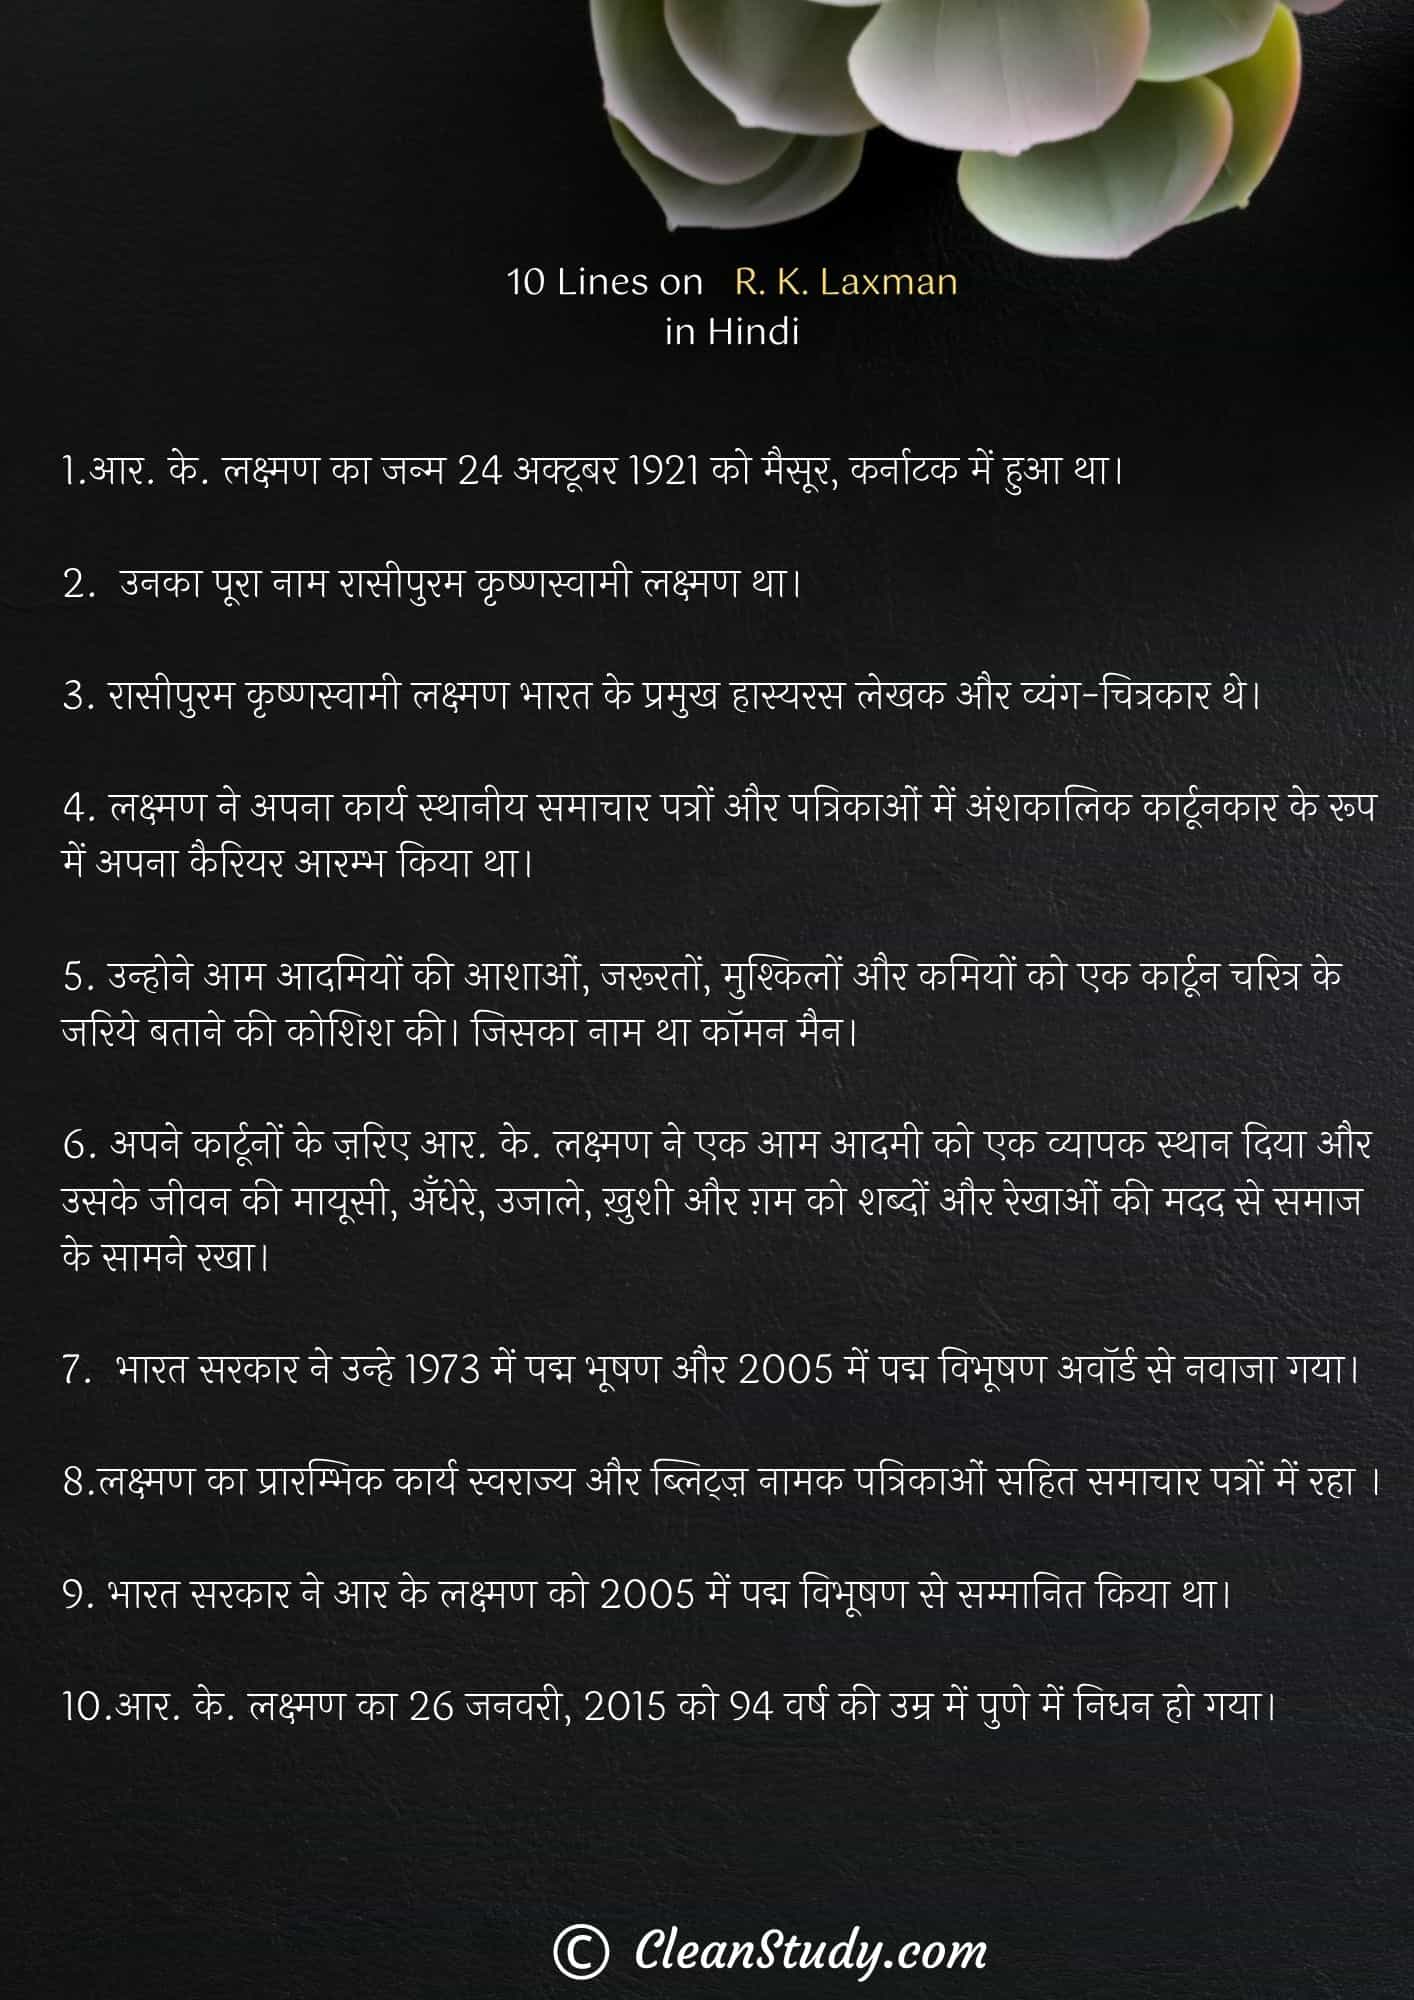 10 Lines on R. K. Laxman in Hindi